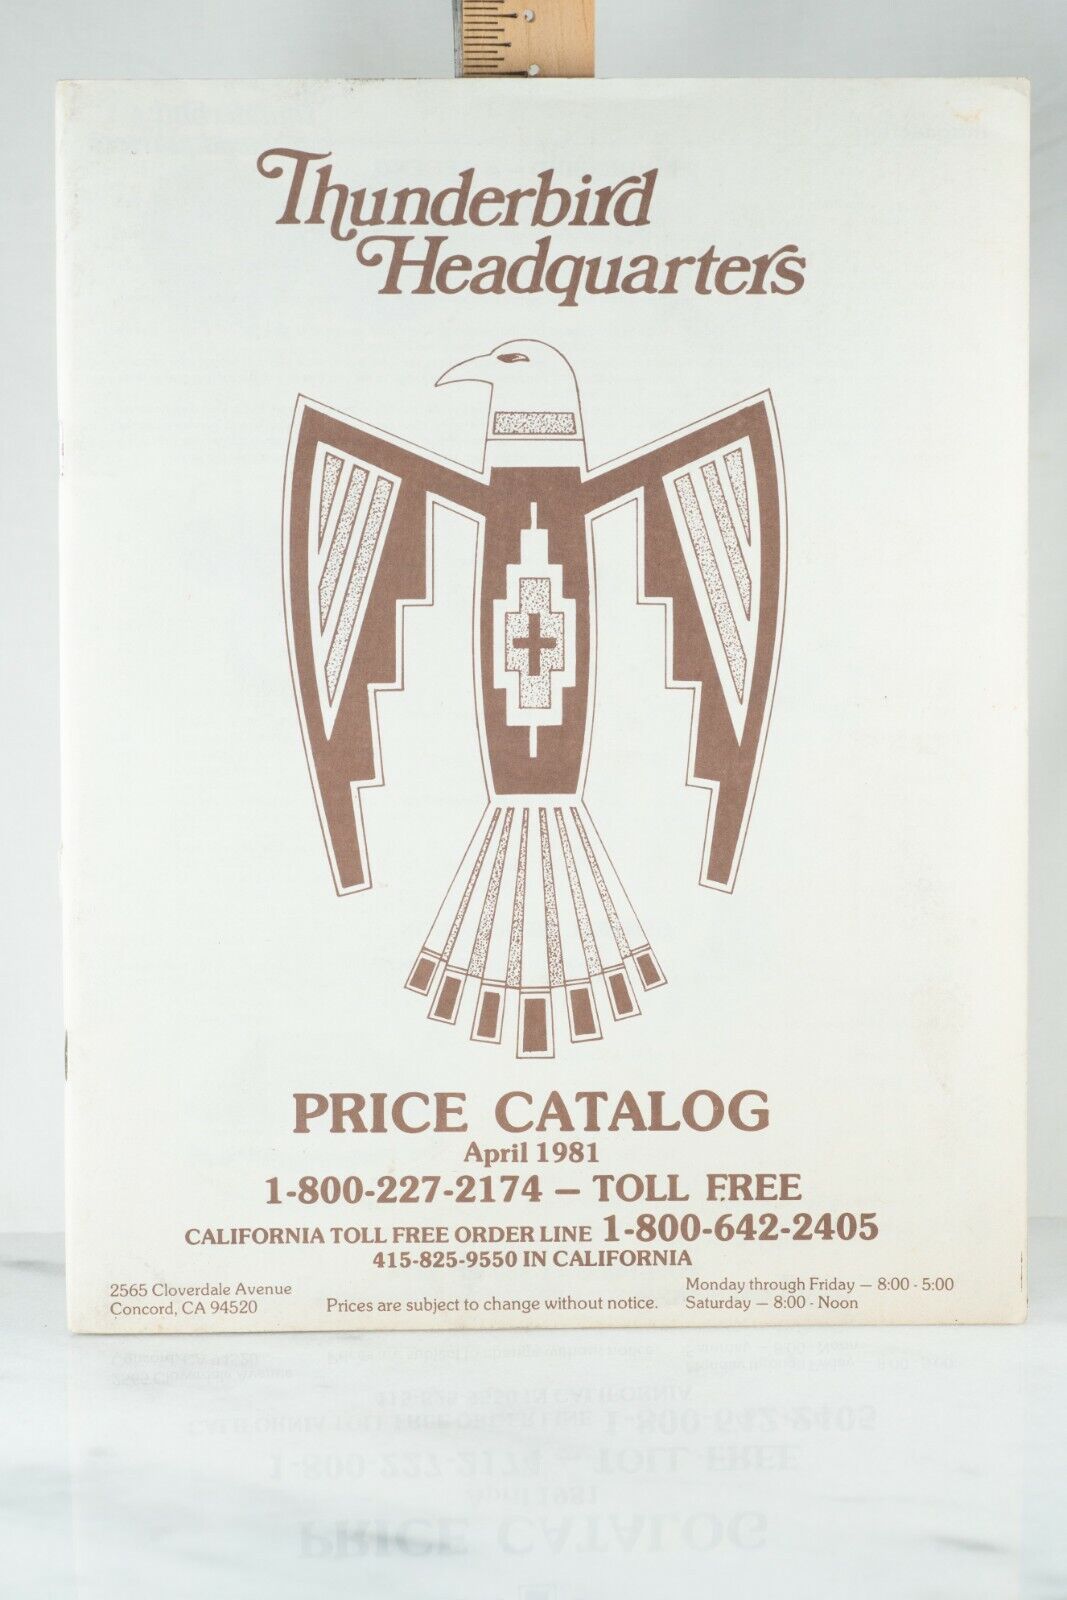 Ford Thunderbird, Thunderbird Headquarters Parts Price Catalog 1981